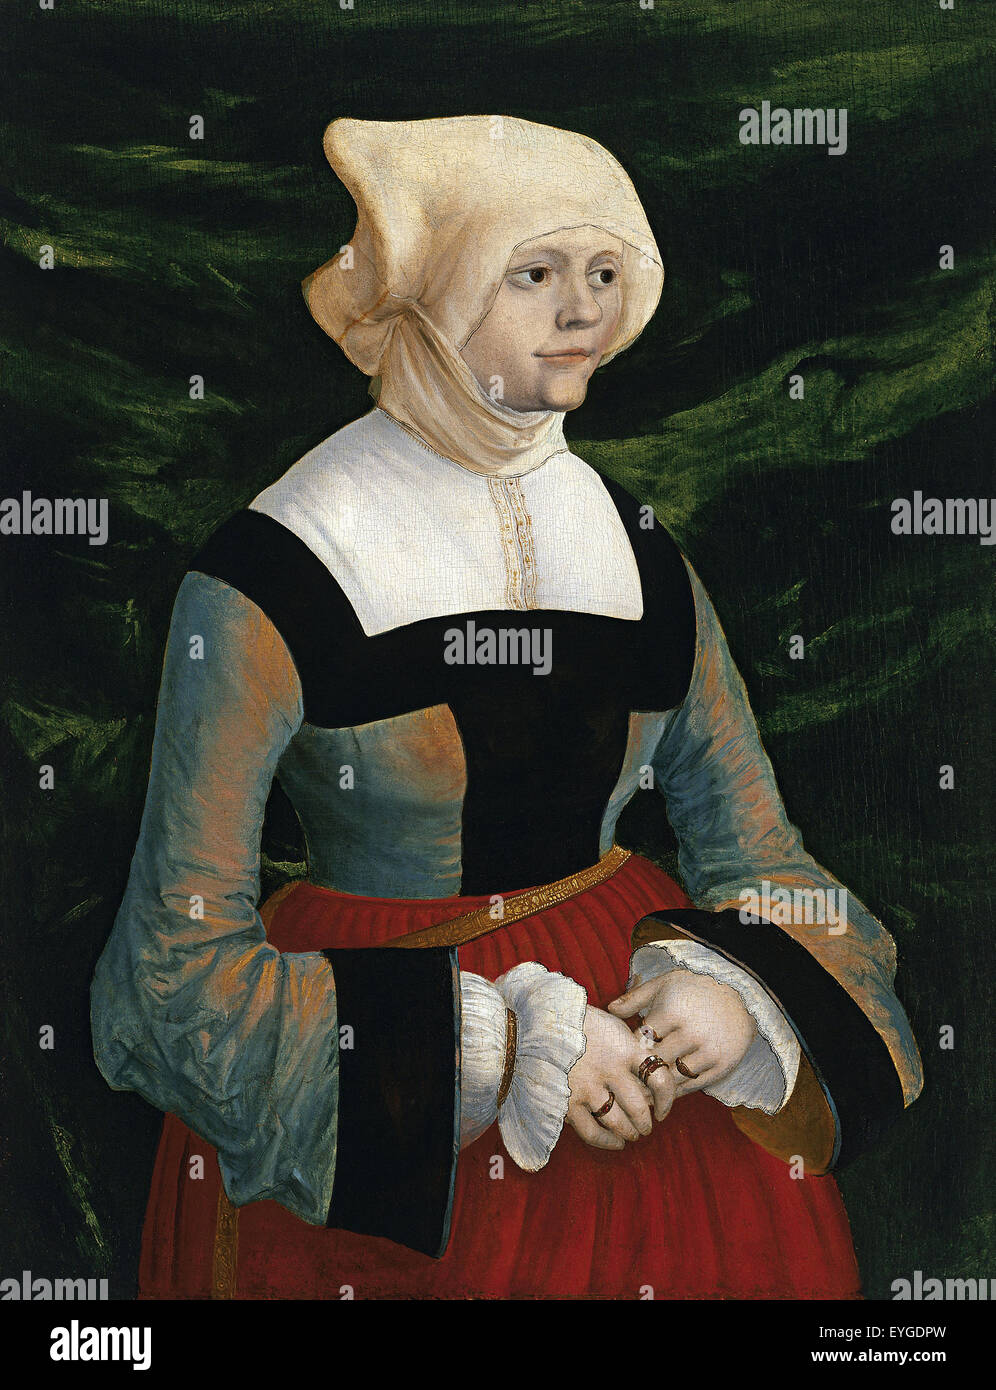 Albrecht Altdorfer - Portrait of a Young Woman - XVI th century - Flemish Stock Photo